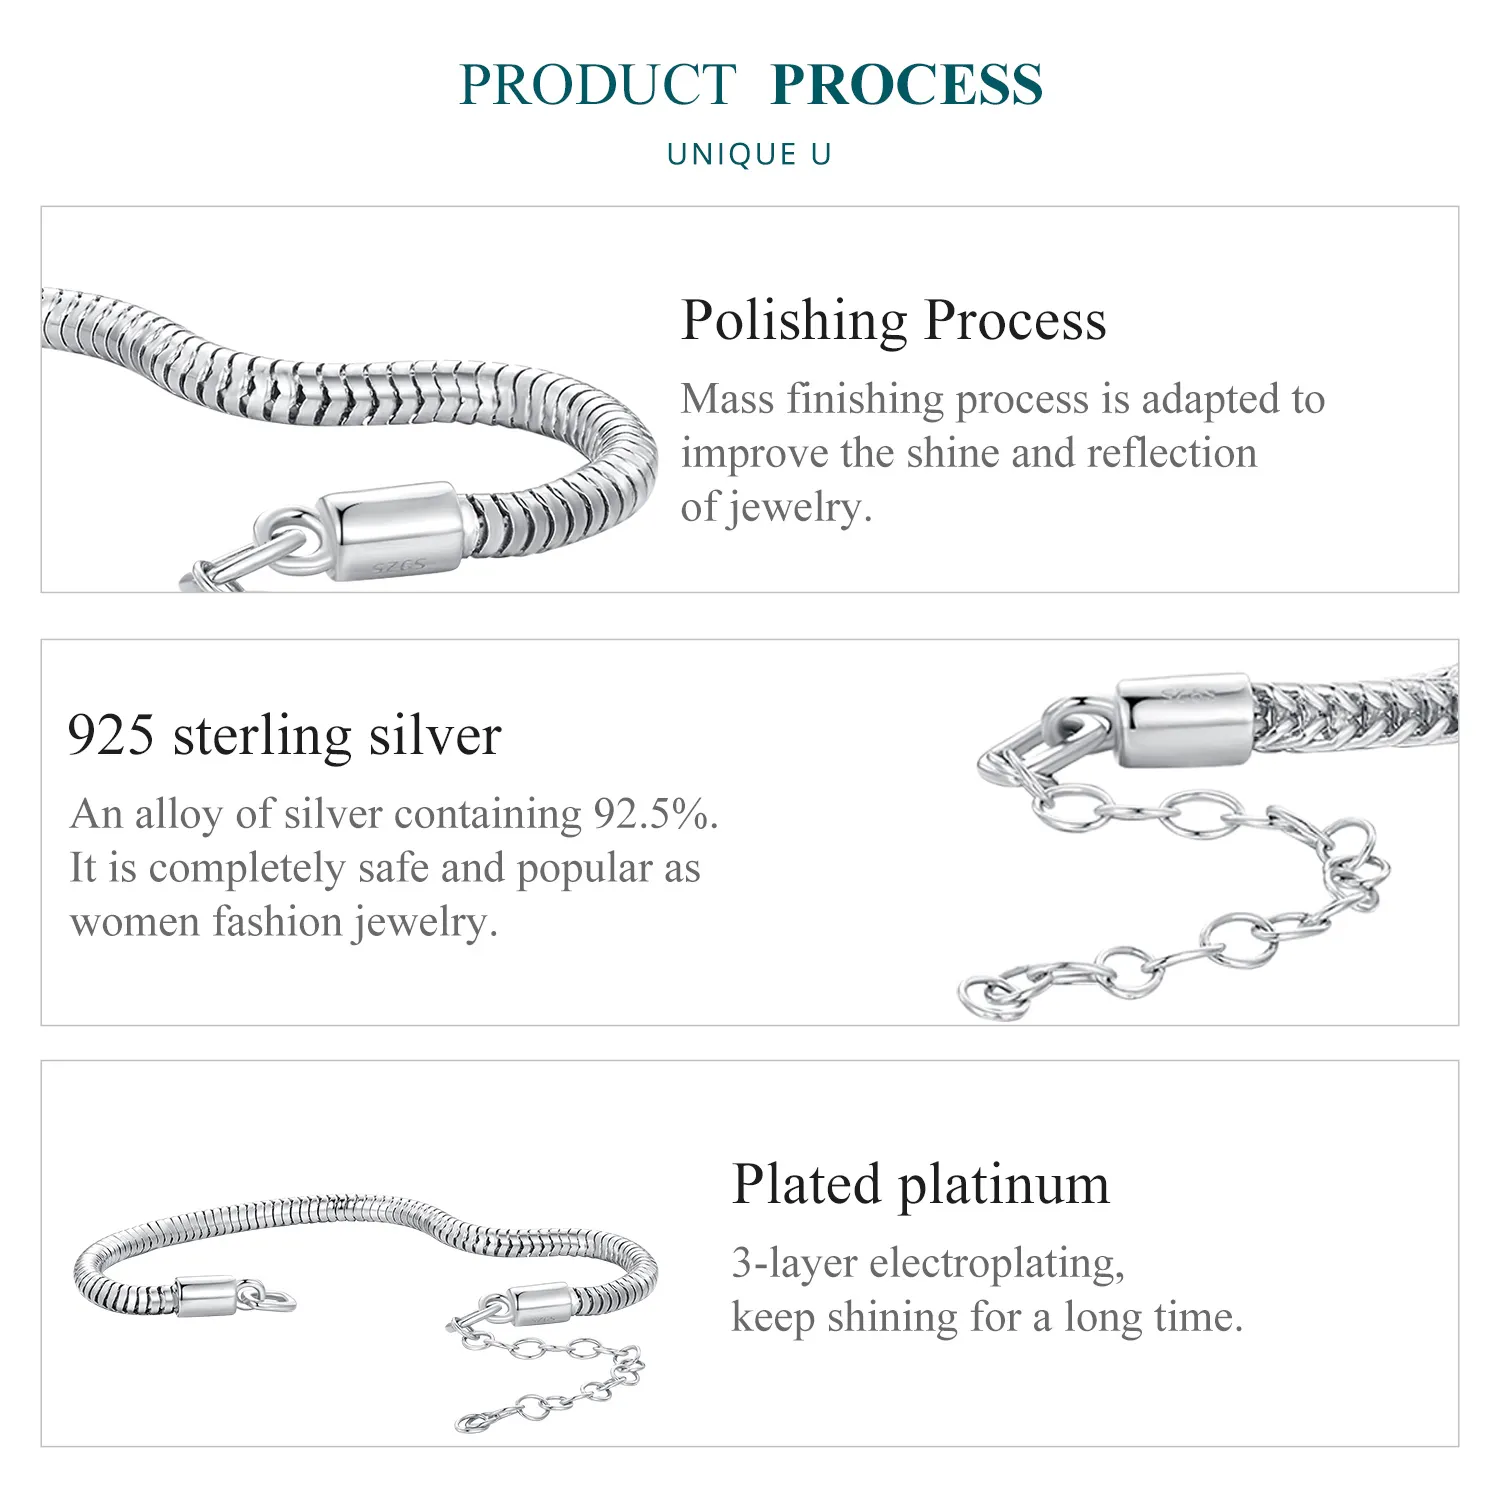 Pandora Style Snake Bone Chain Chain Bracelet - BSB150